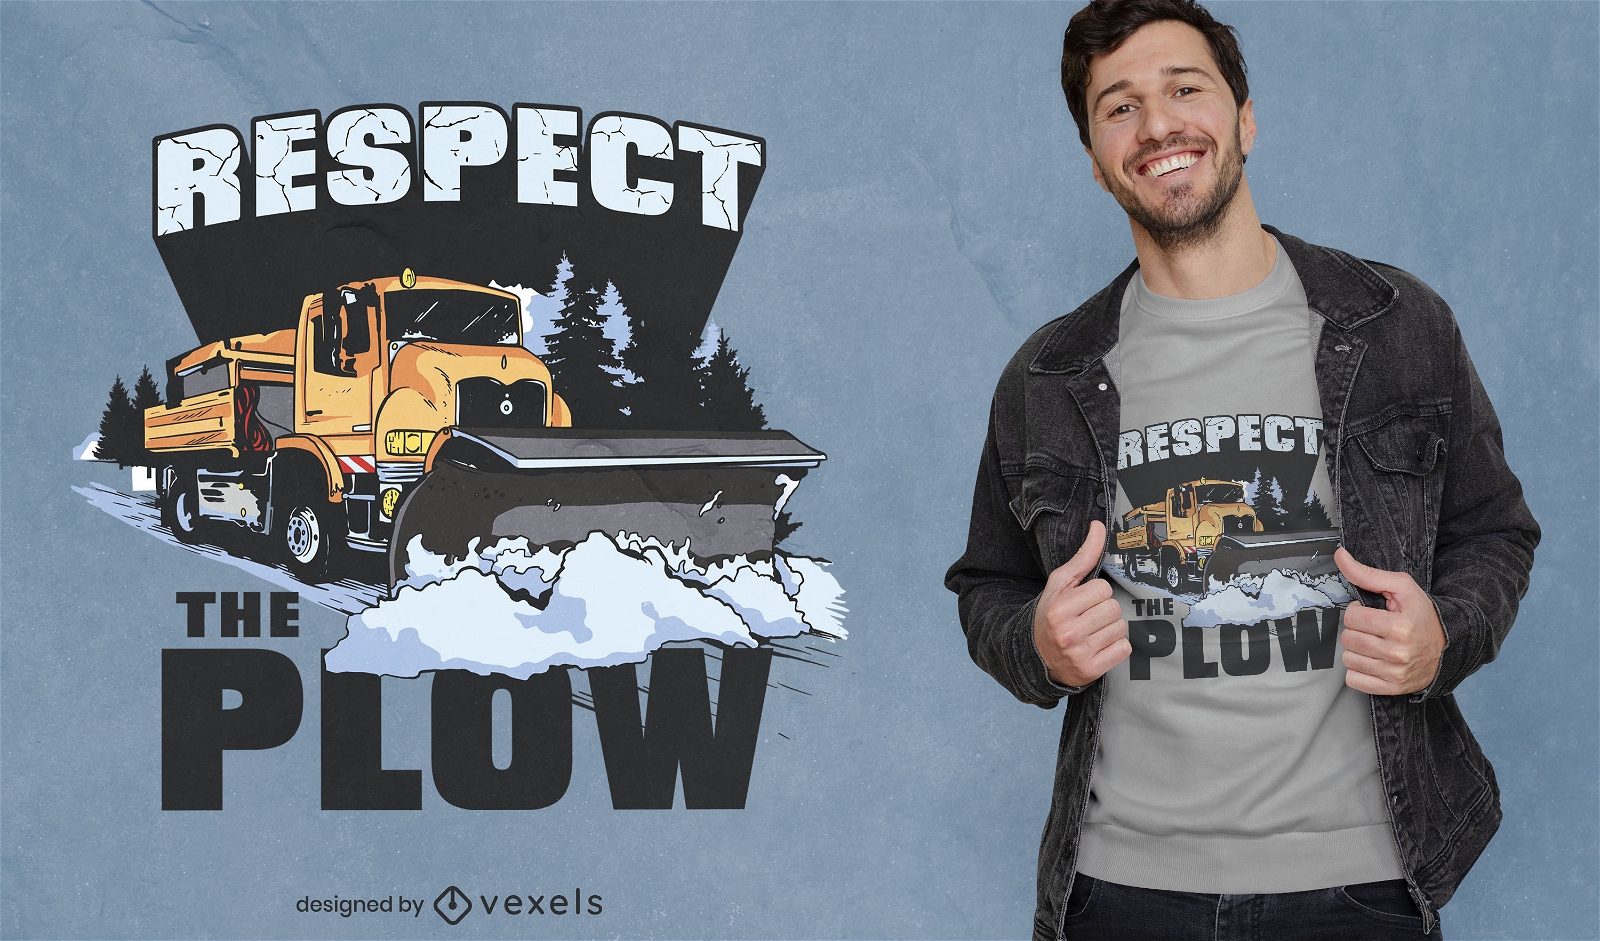 Respect the plow t-shirt design